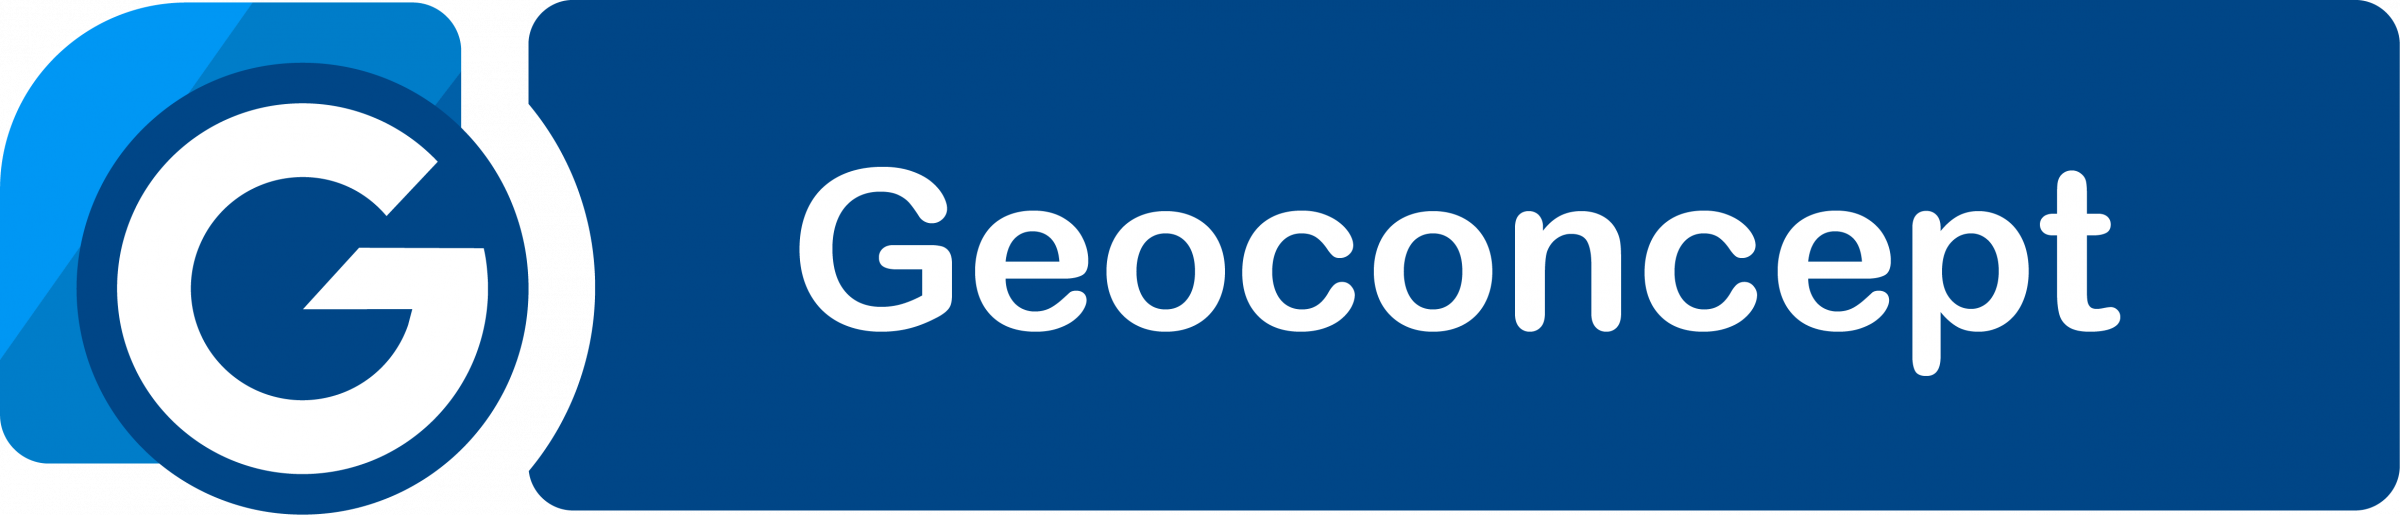 logo-geoconcept-gis